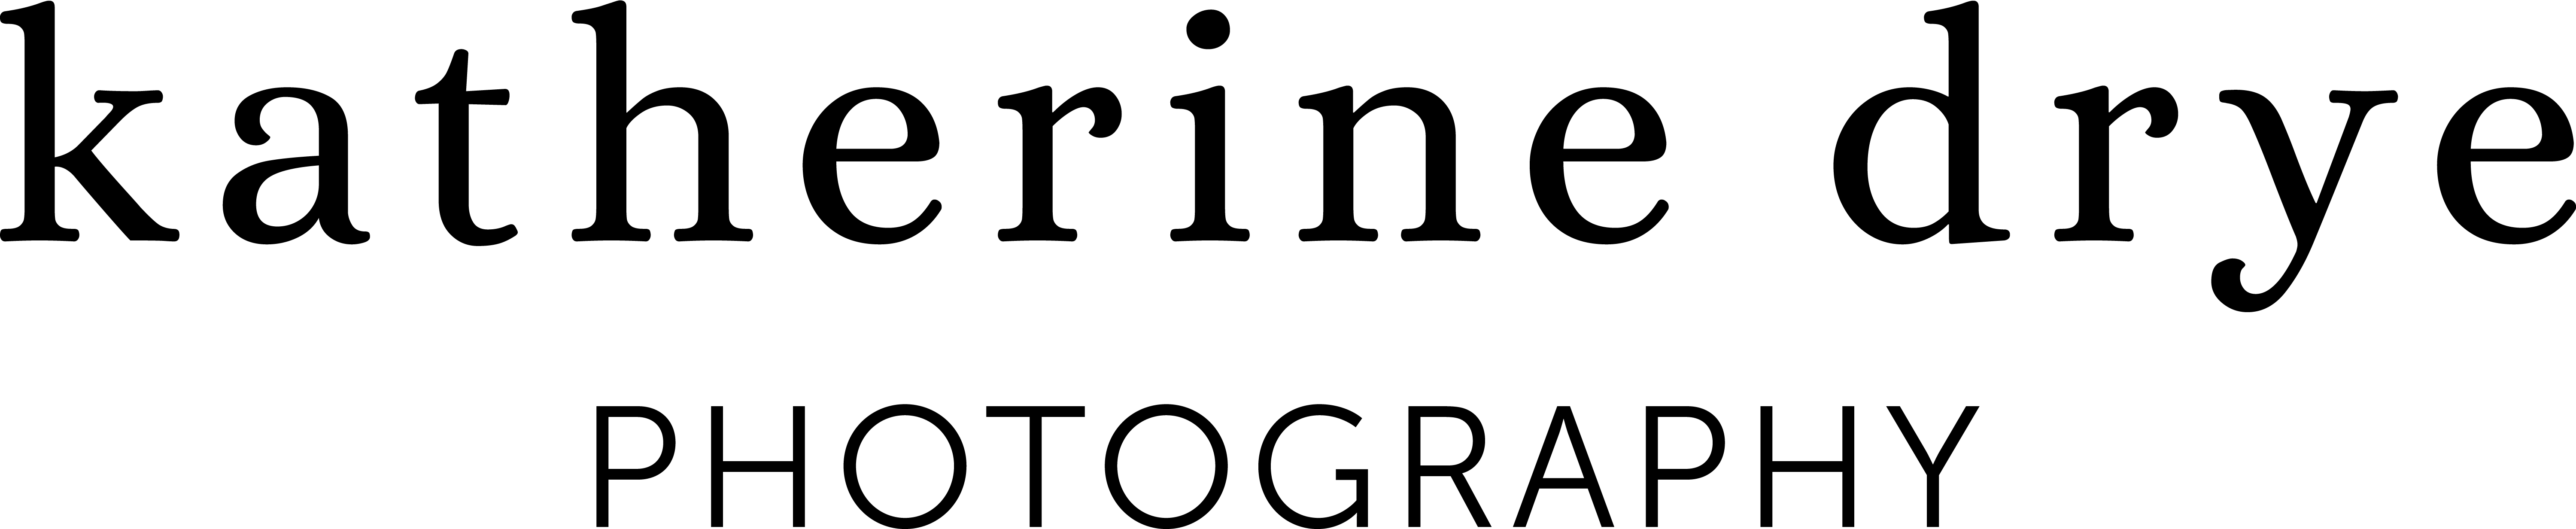 katherine drye photography logo